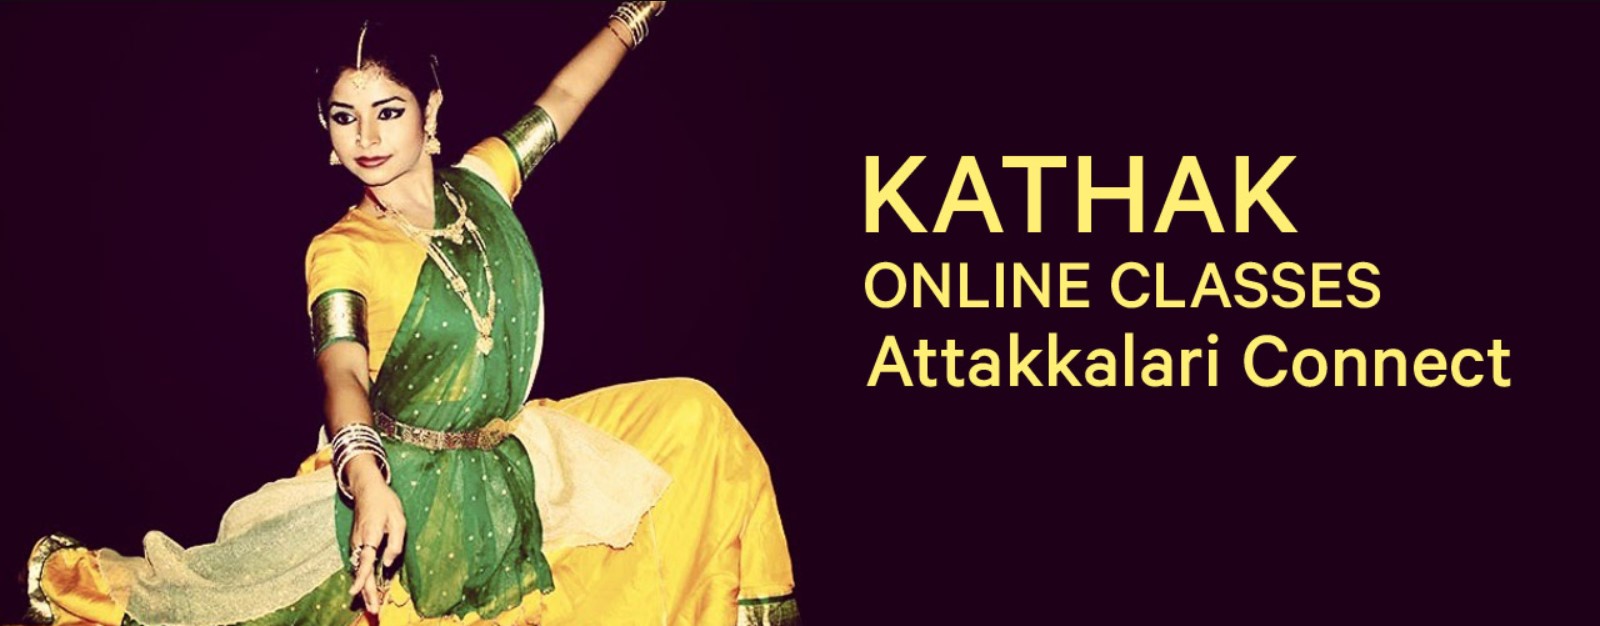 Kathak Dance Online - Attakkalari Connect - Creative Yatra